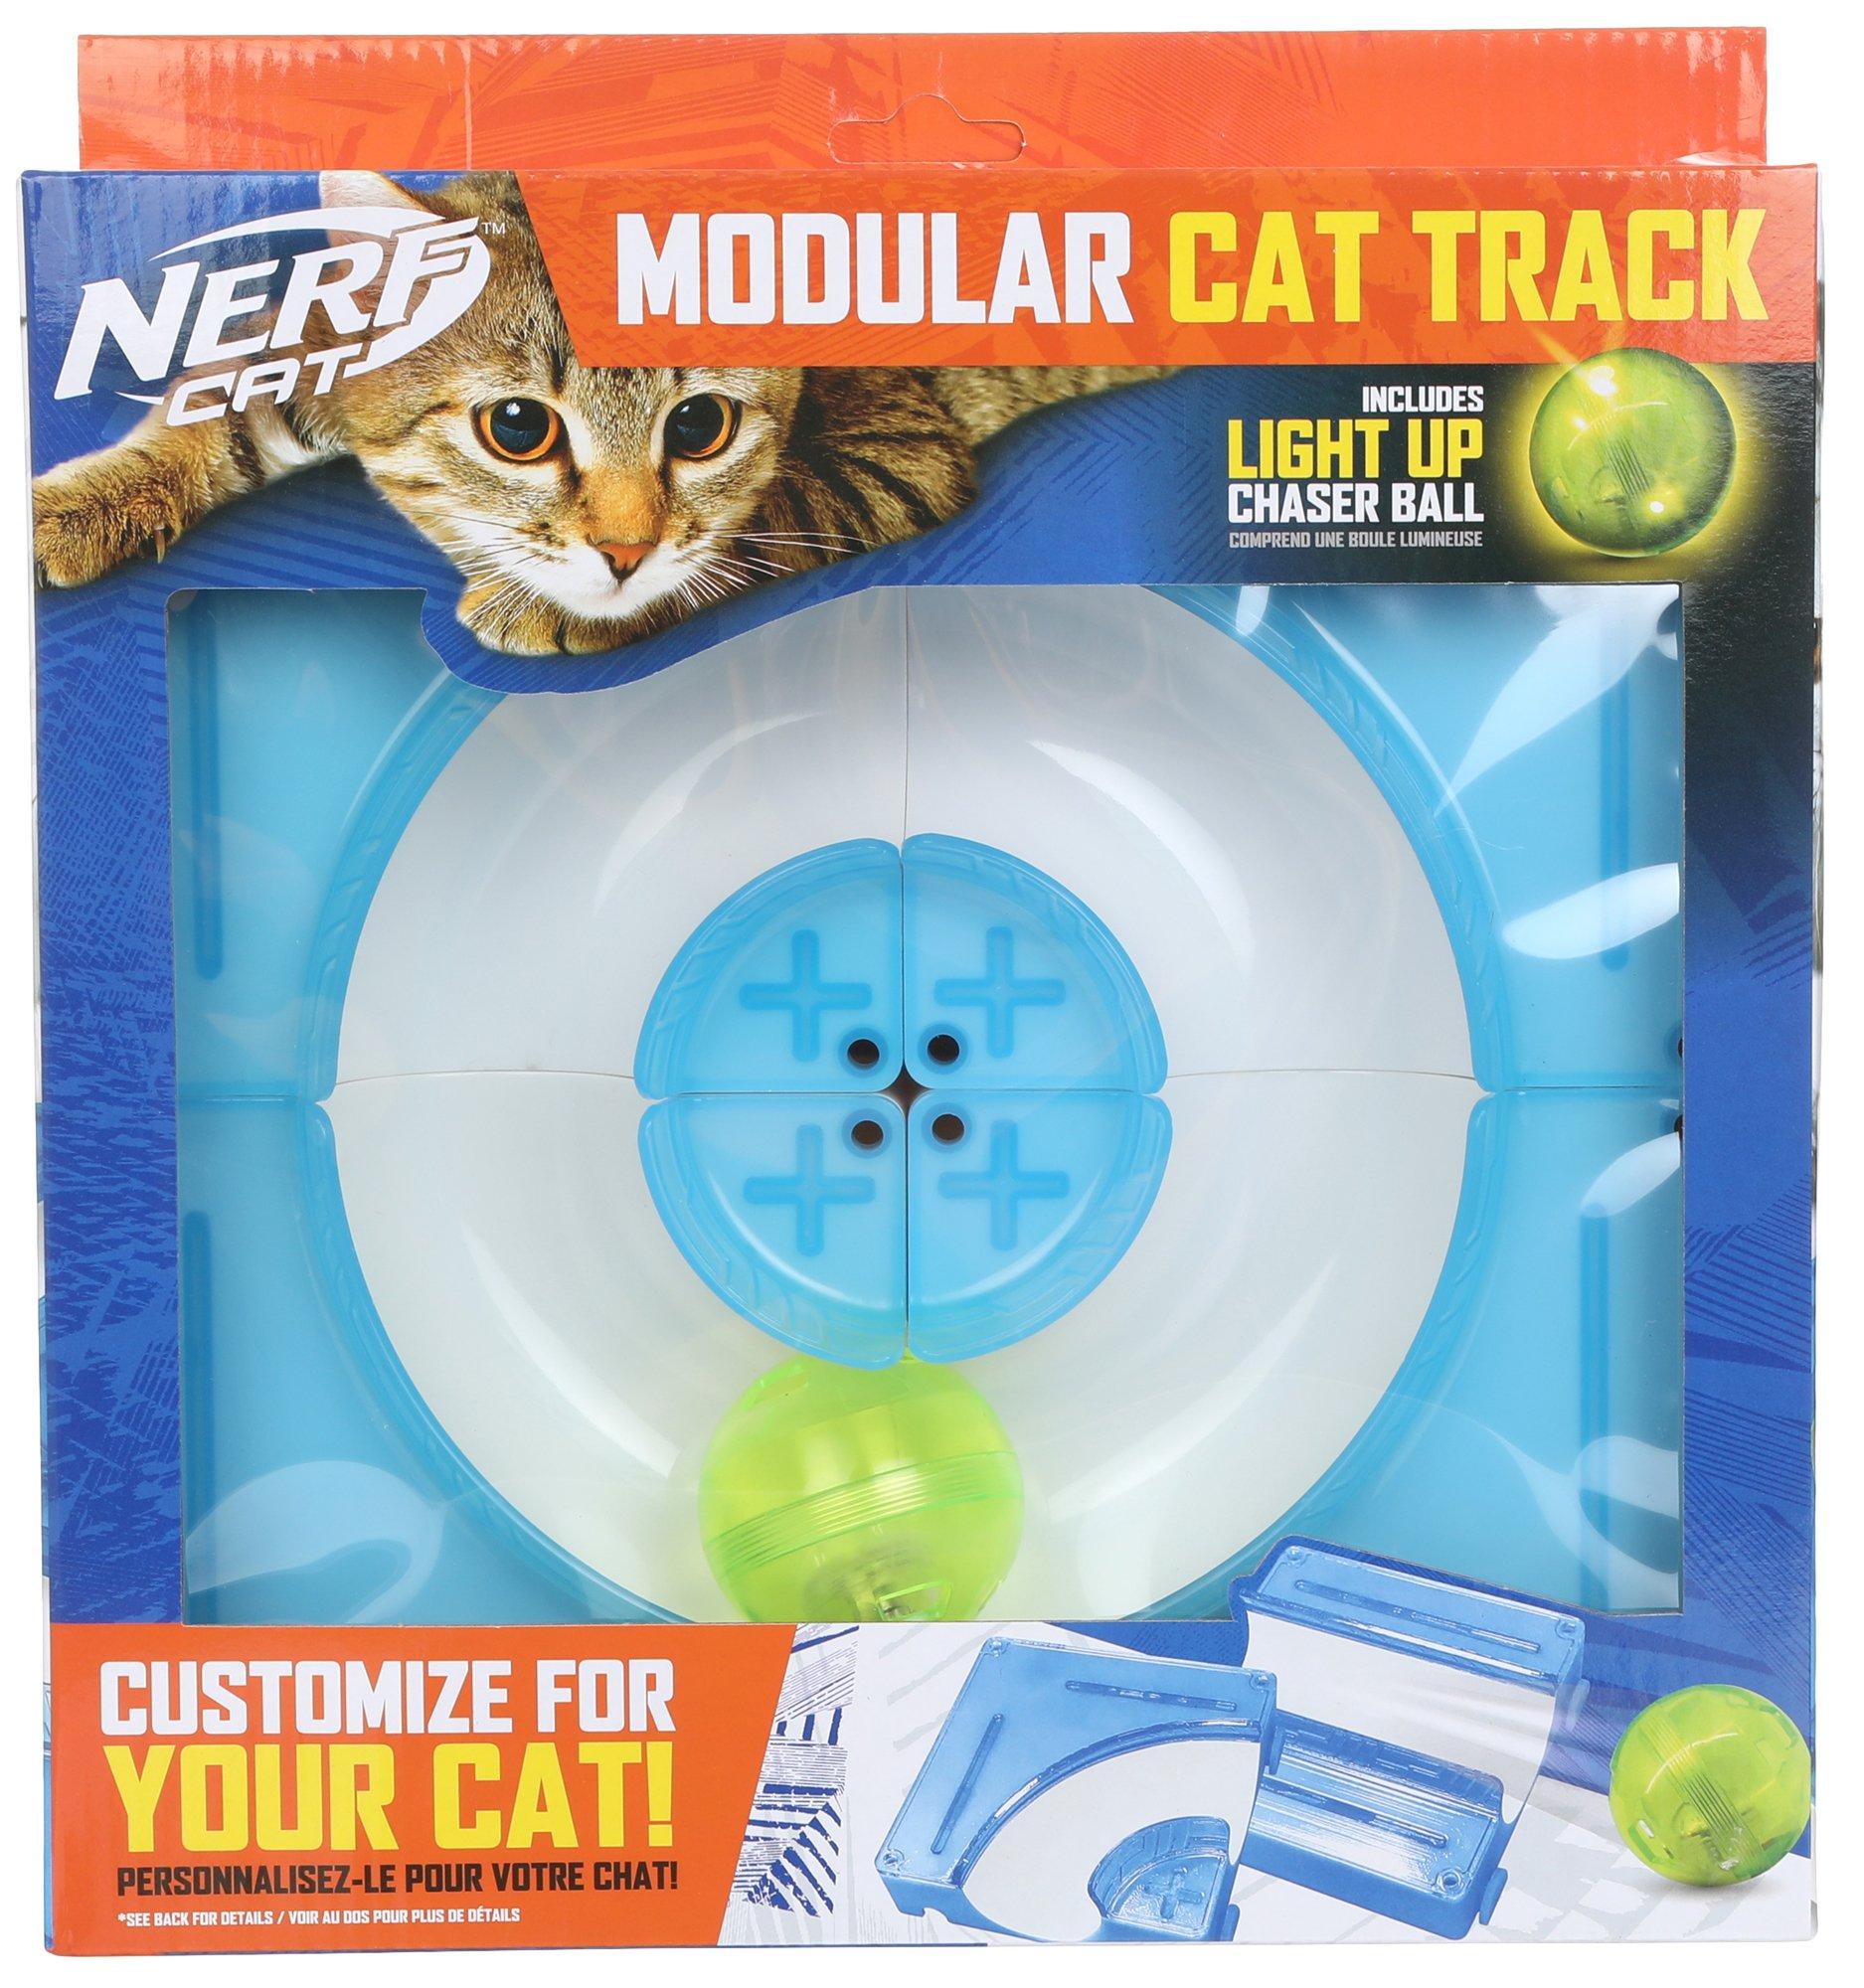 Modular Cat Track